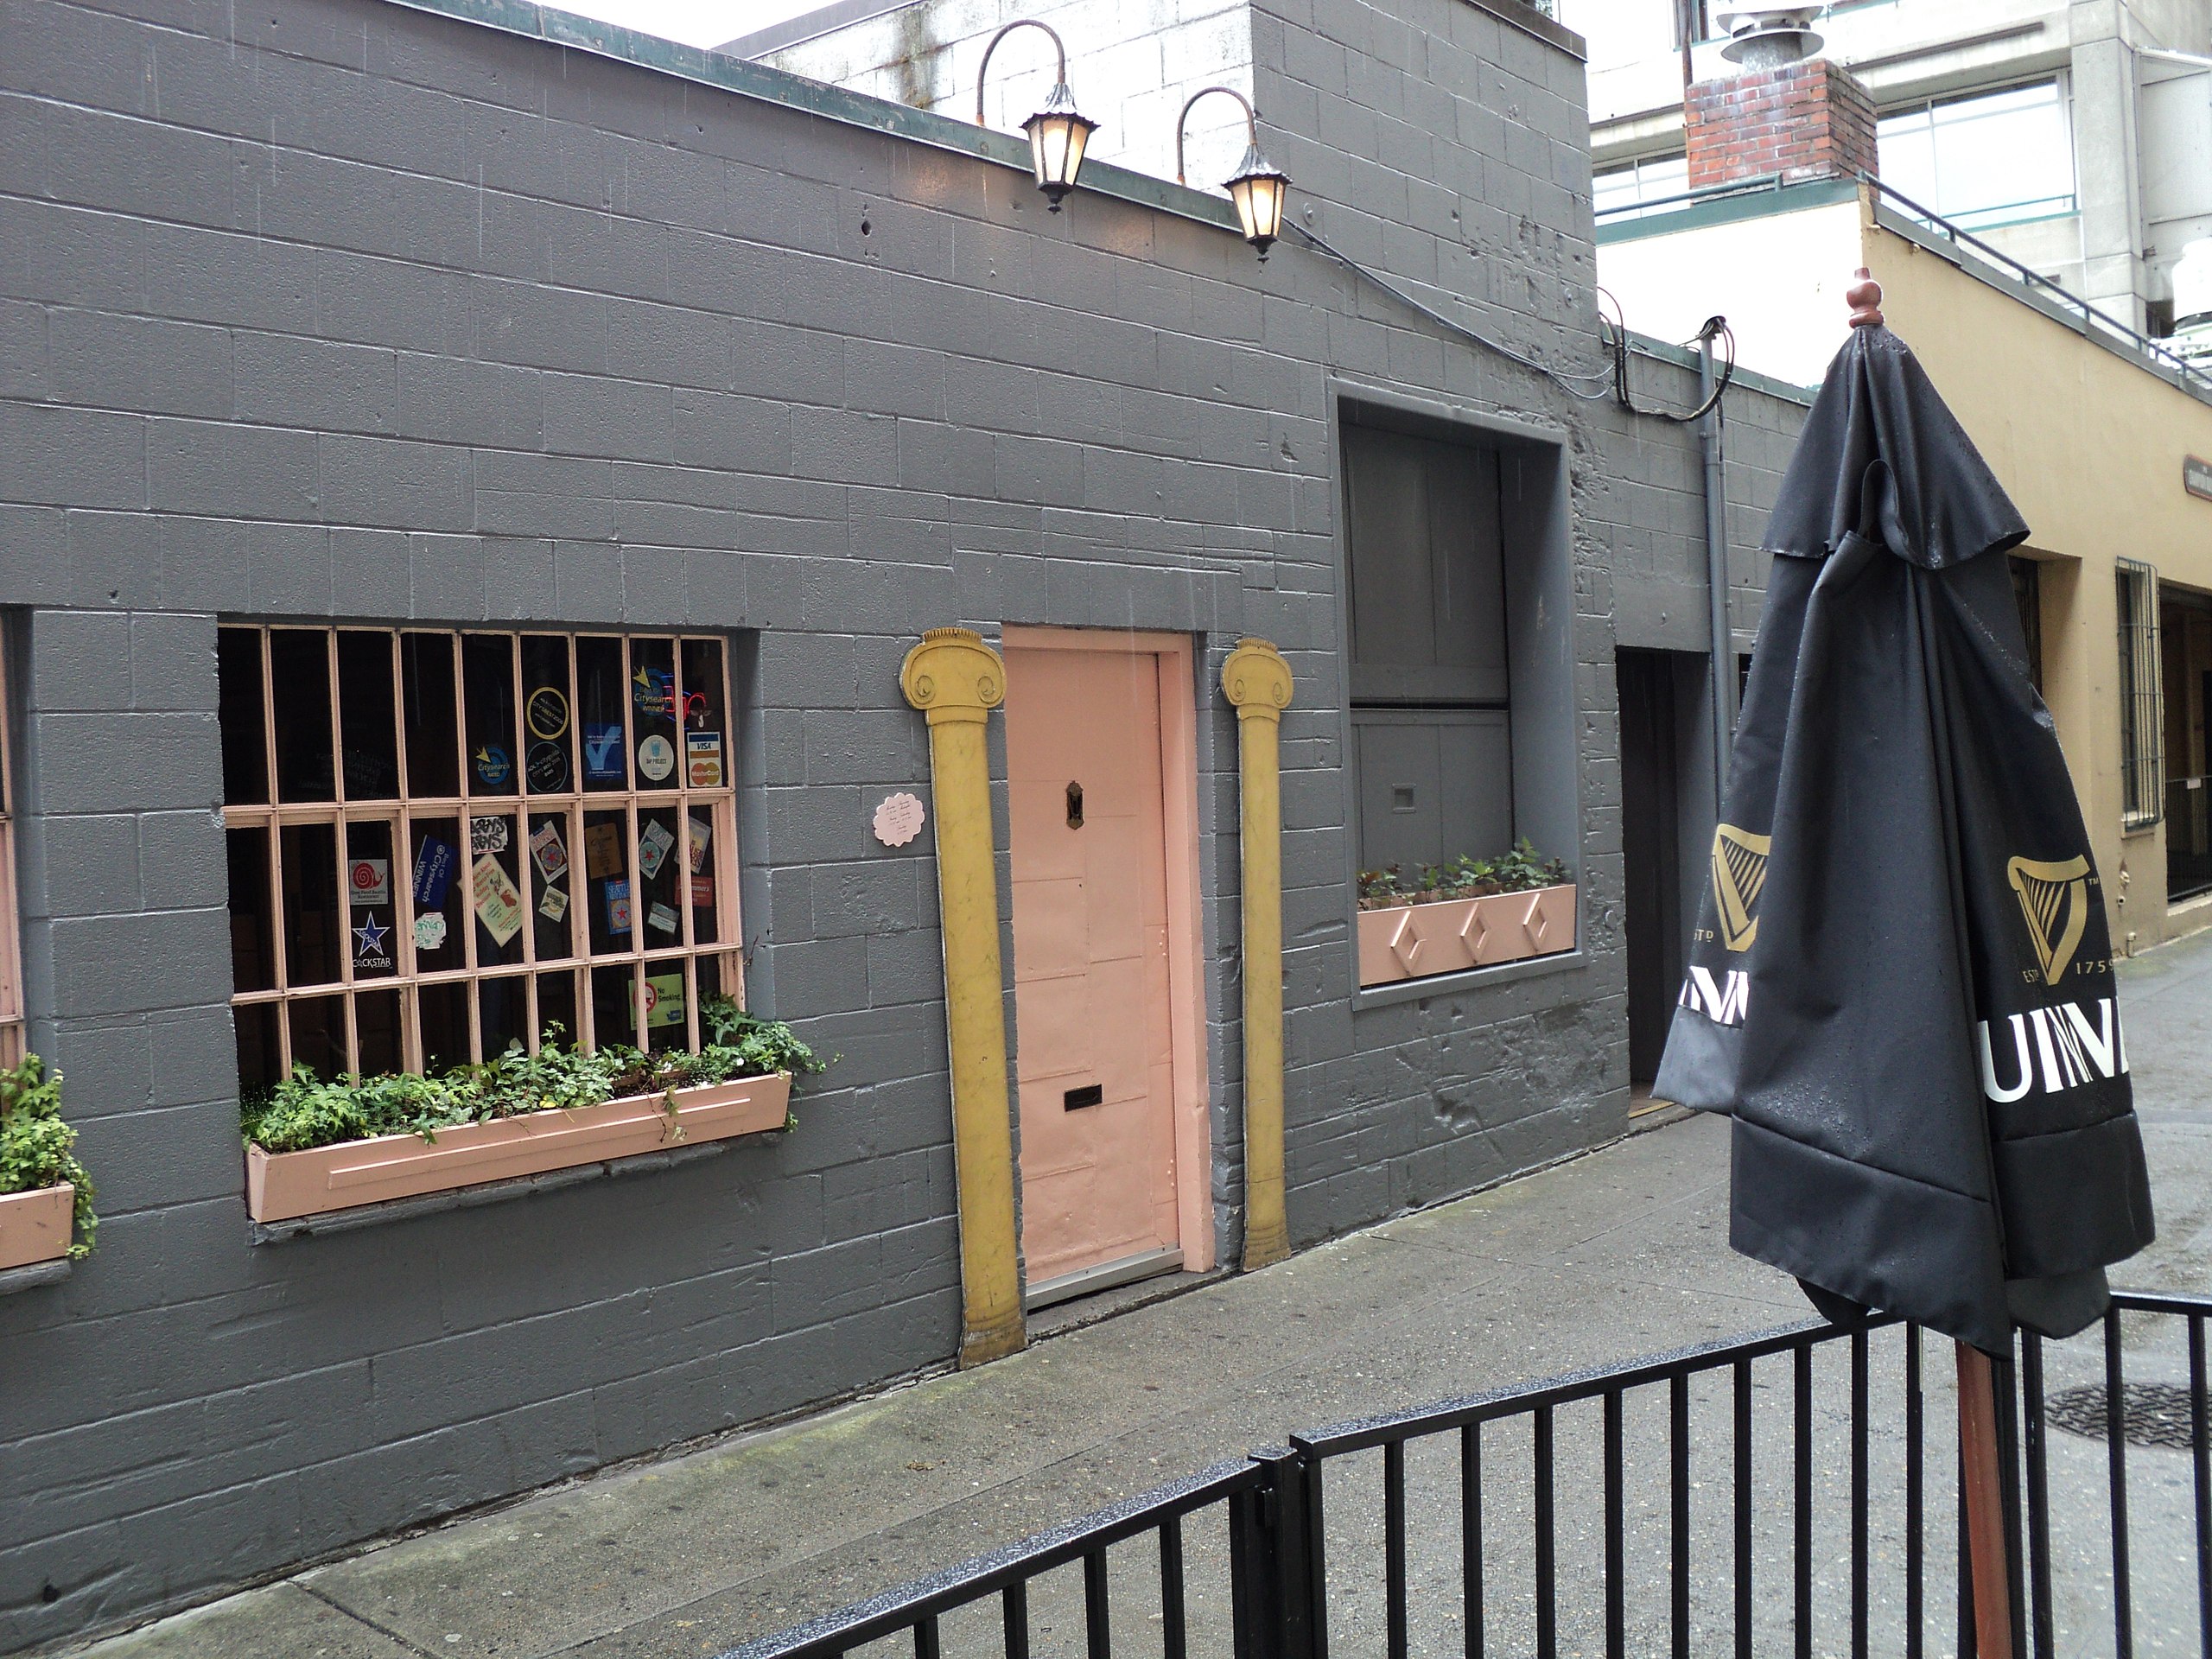 File:Pink Door restaurant Post Alley Pike Place Market Seattle  Washington.JPG - Wikipedia